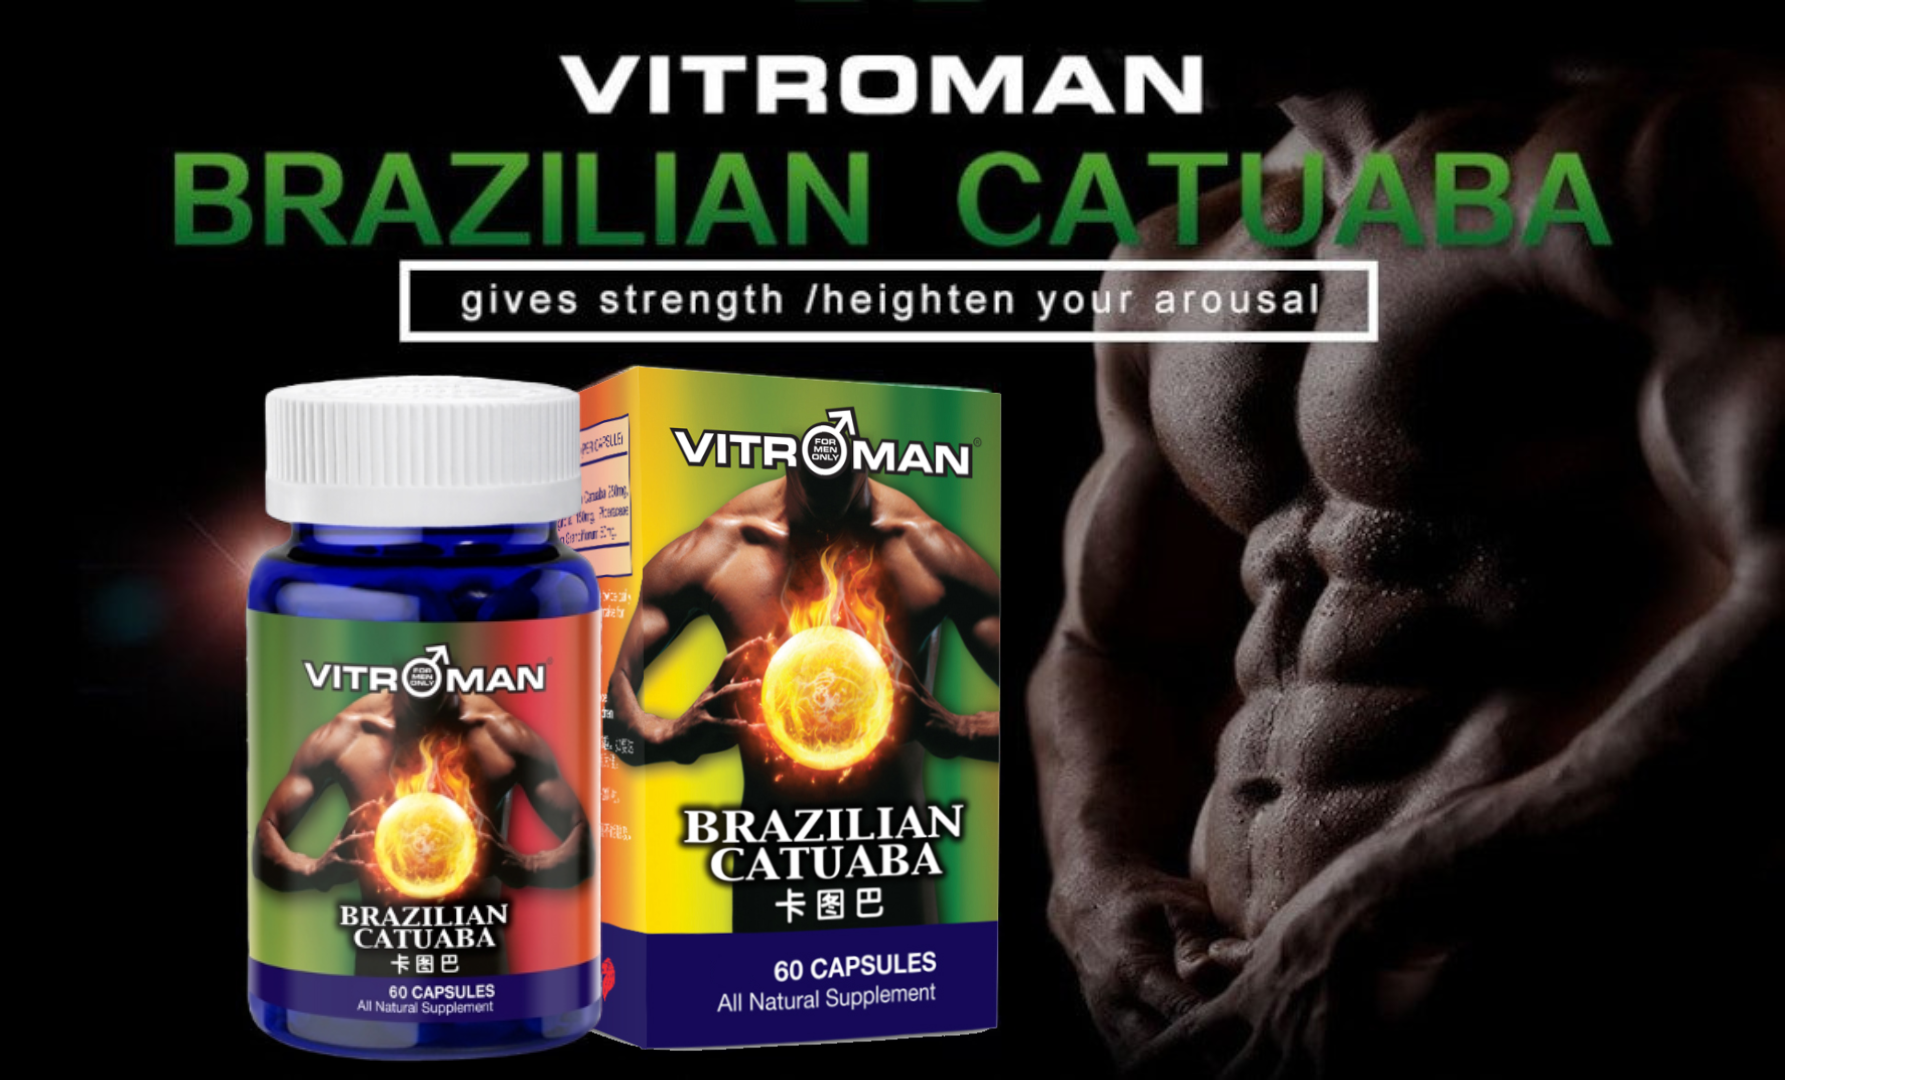 Vitroman Brazilian Catuaba gives strength and heighten your arousal